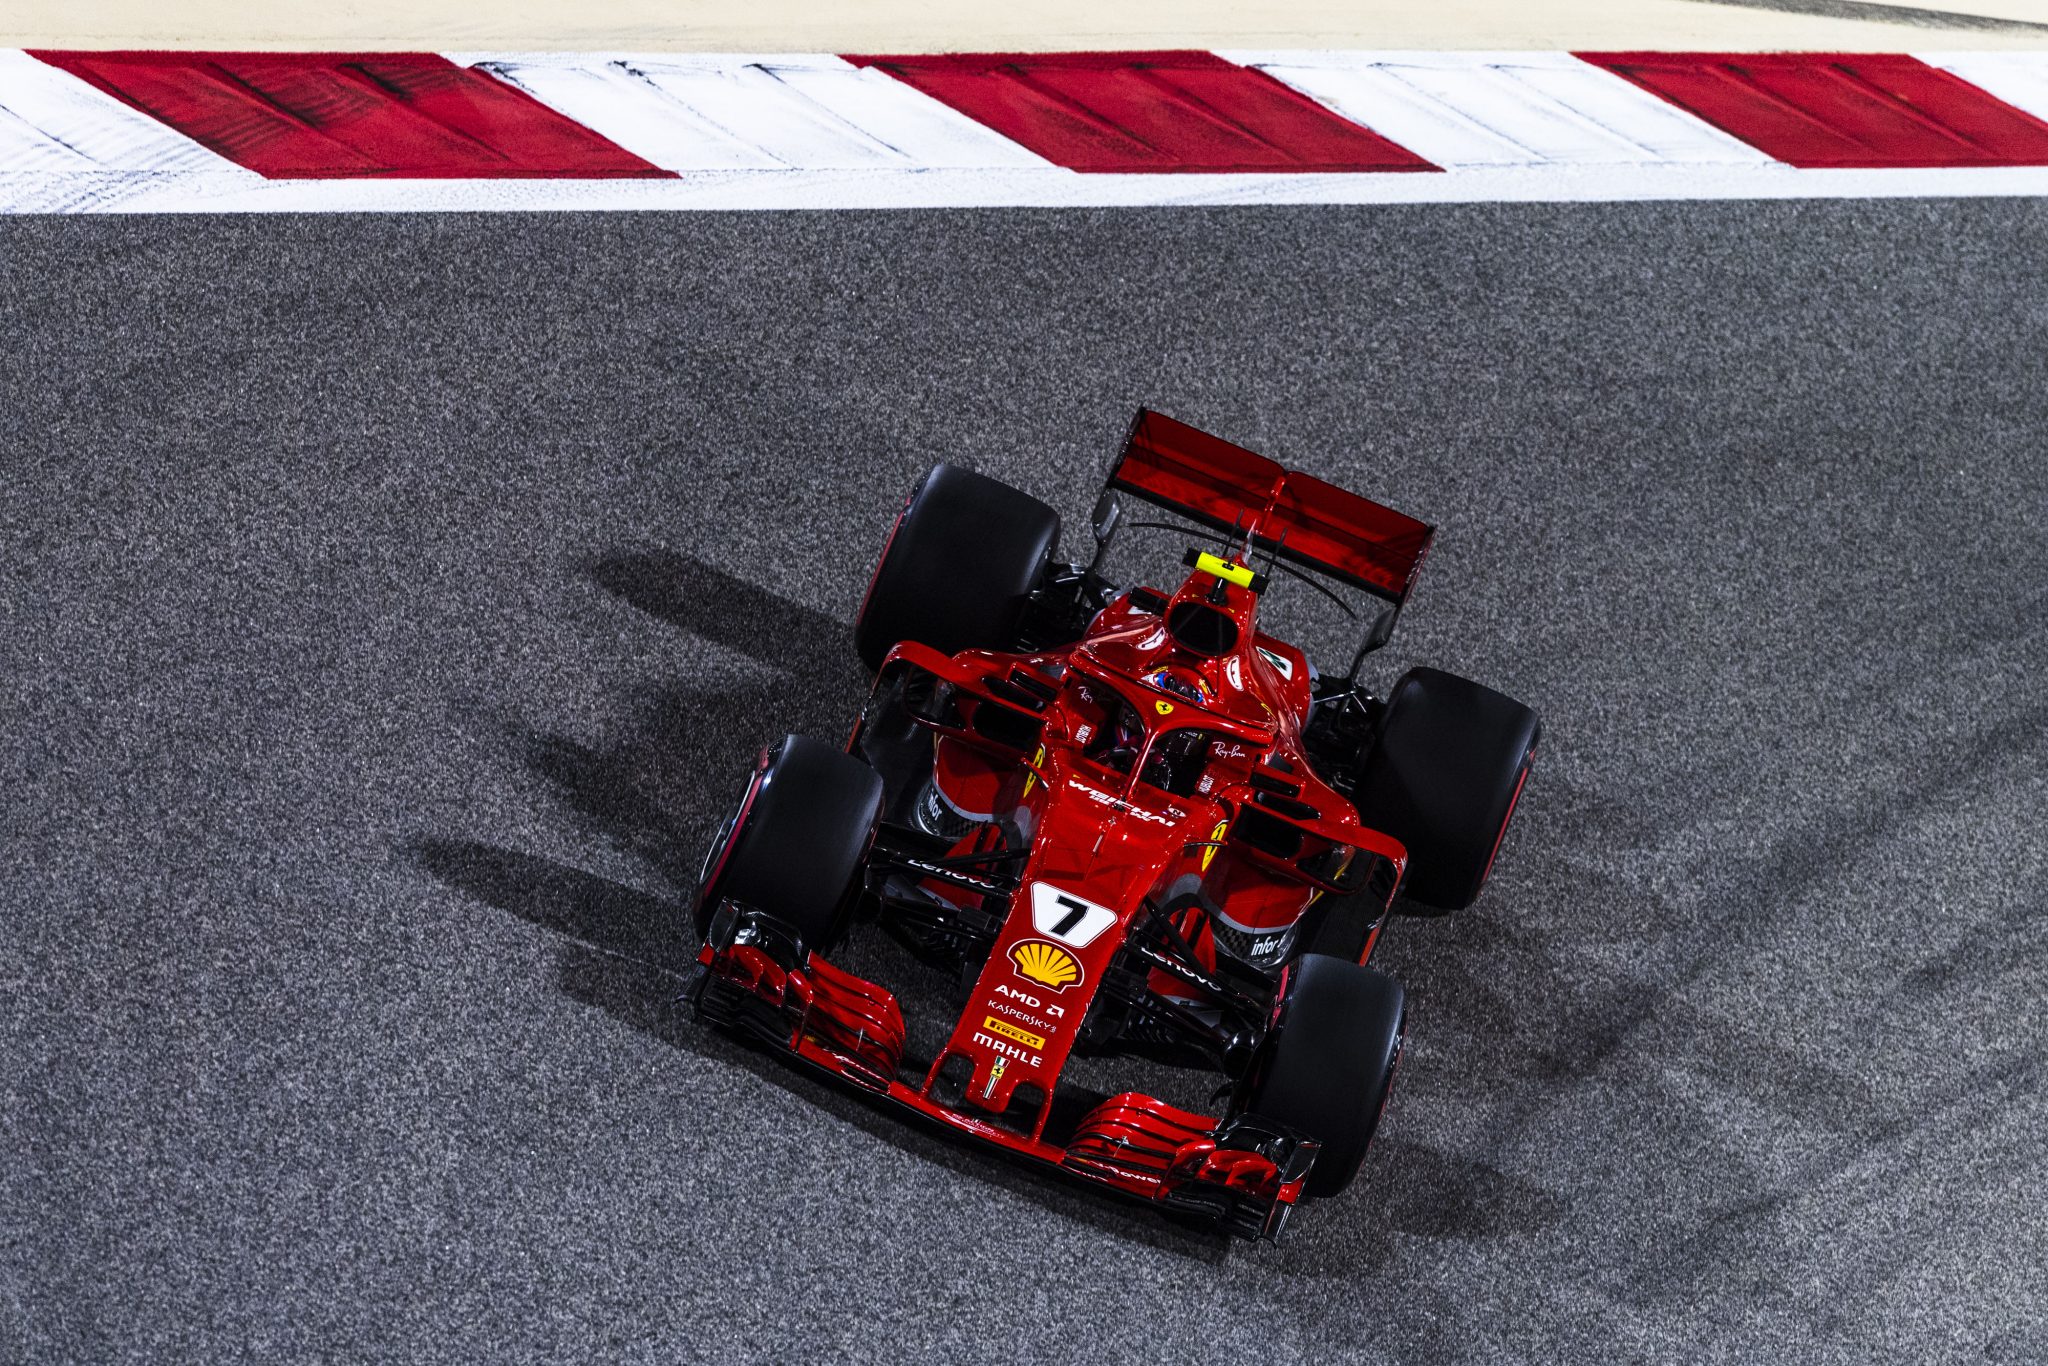 Ferrari mechanic hospitalised after pit error